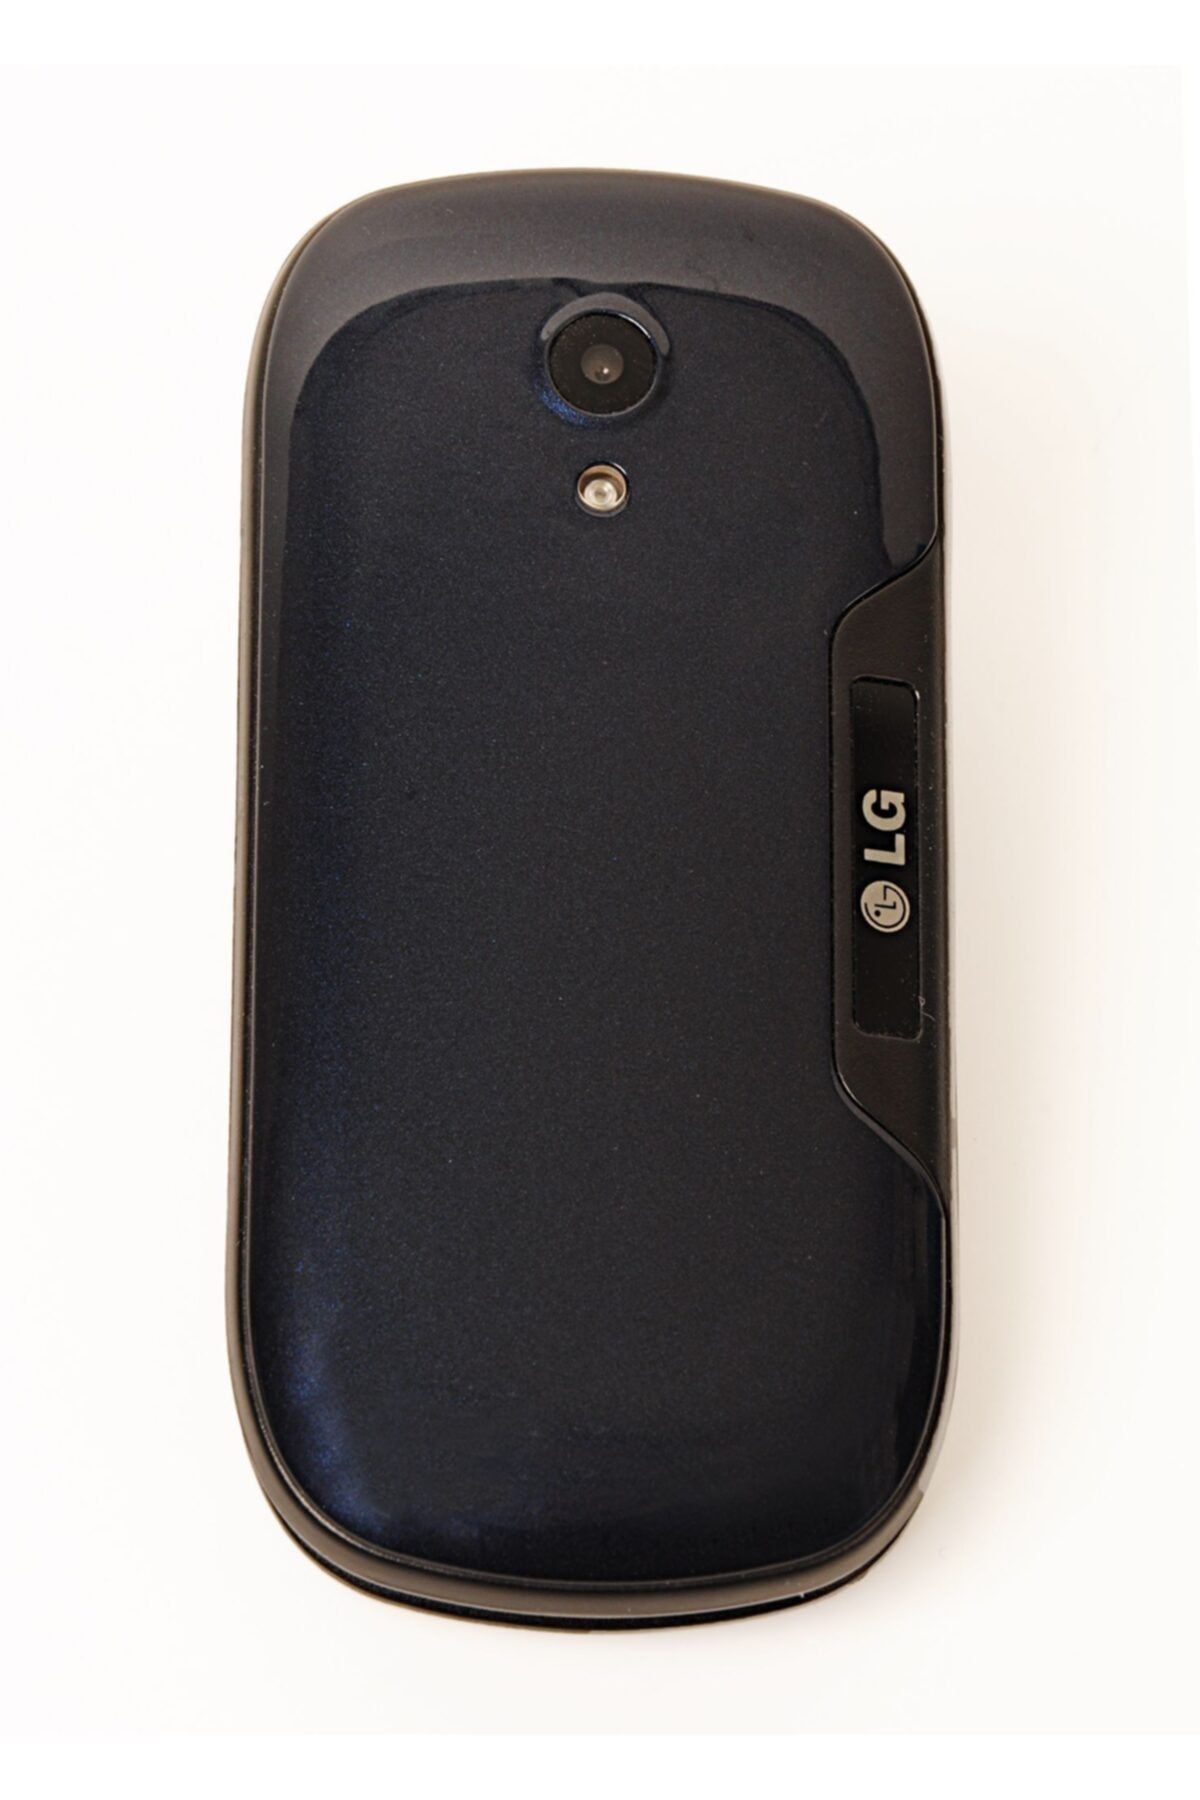 LG B 190-d855tr Kapaklı Tuşlu Telefon Siyah-sılver-gold Renkler